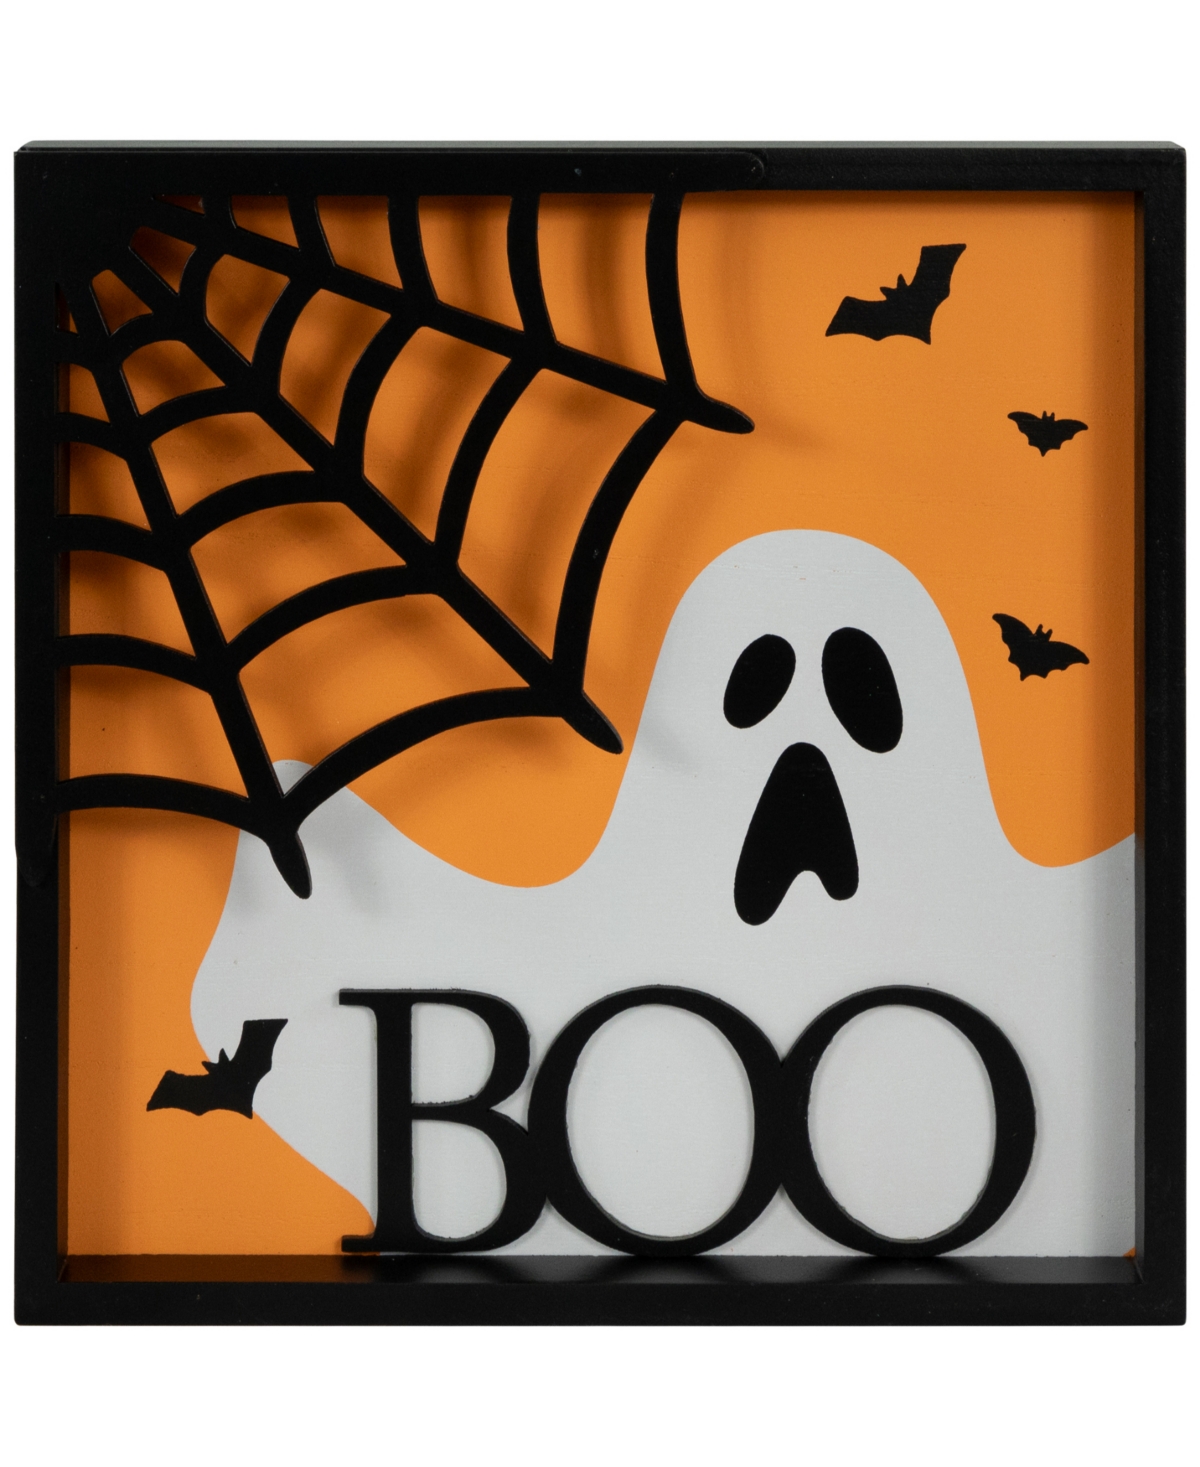 9.75" Framed 3D Boo Halloween Wall Sign - Black